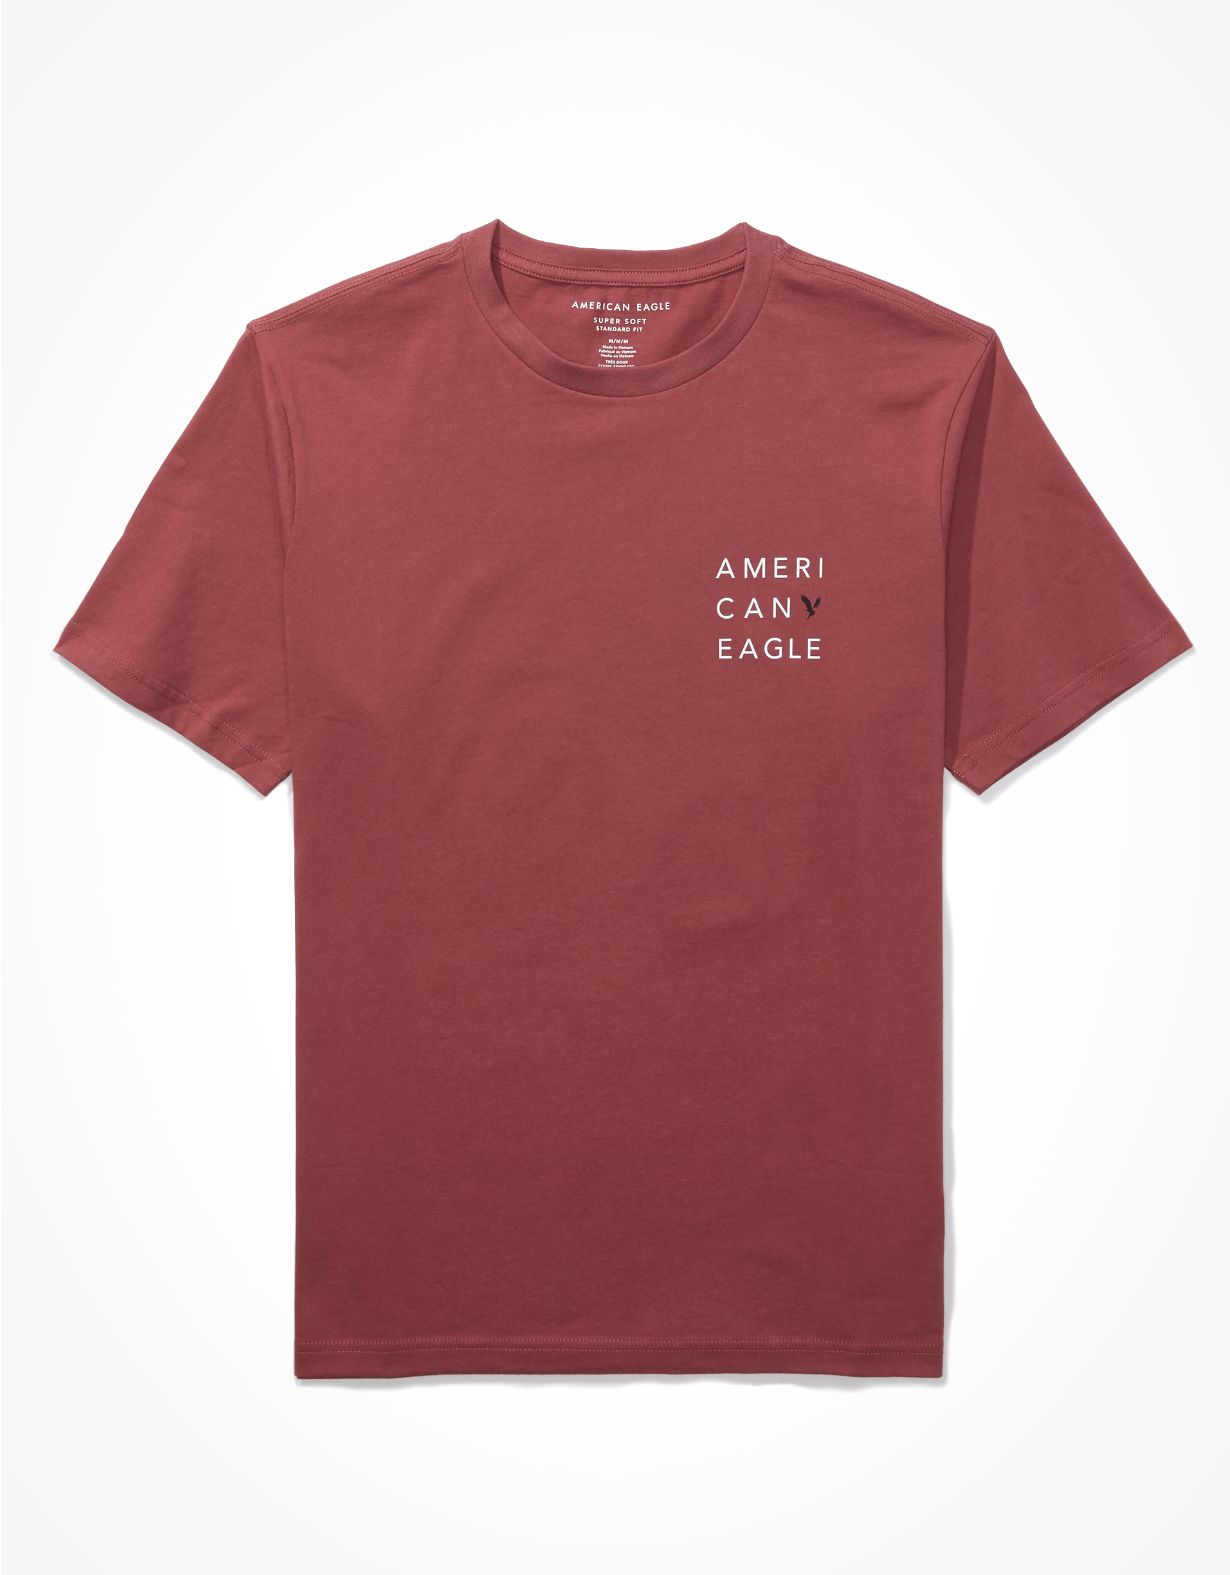 AE Super Soft Left Chest Graphic T-Shirt